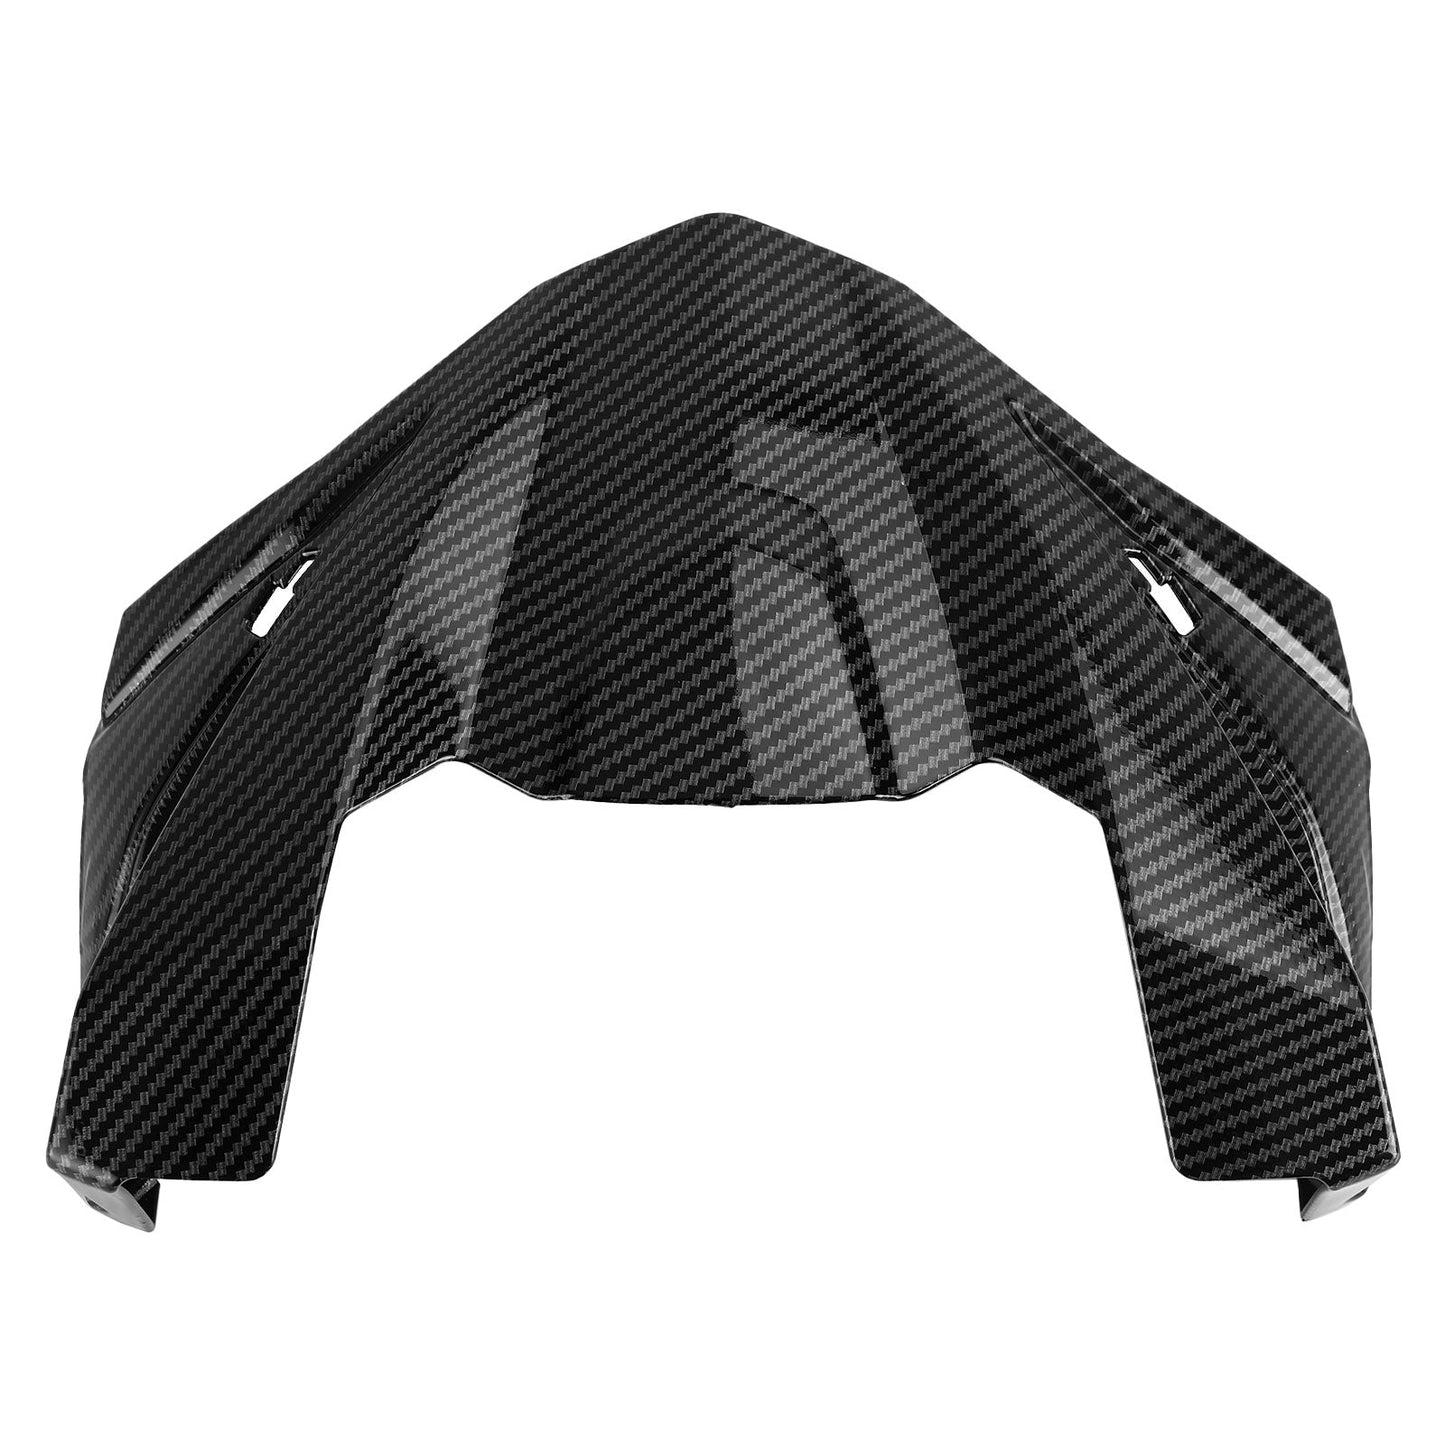 Carbon Front Nose Headlight Cover Surround Fairing For Kawasaki Z650 2017-2019